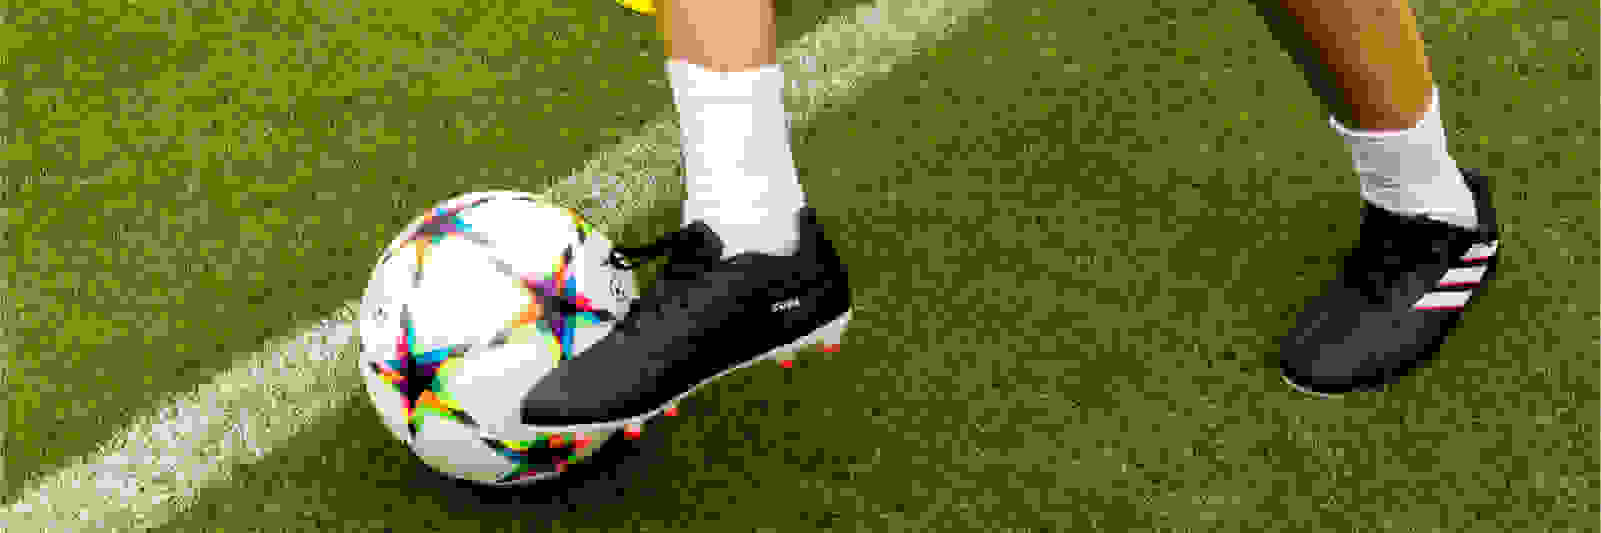 Online Football Shop  Football boots, balls and equipment